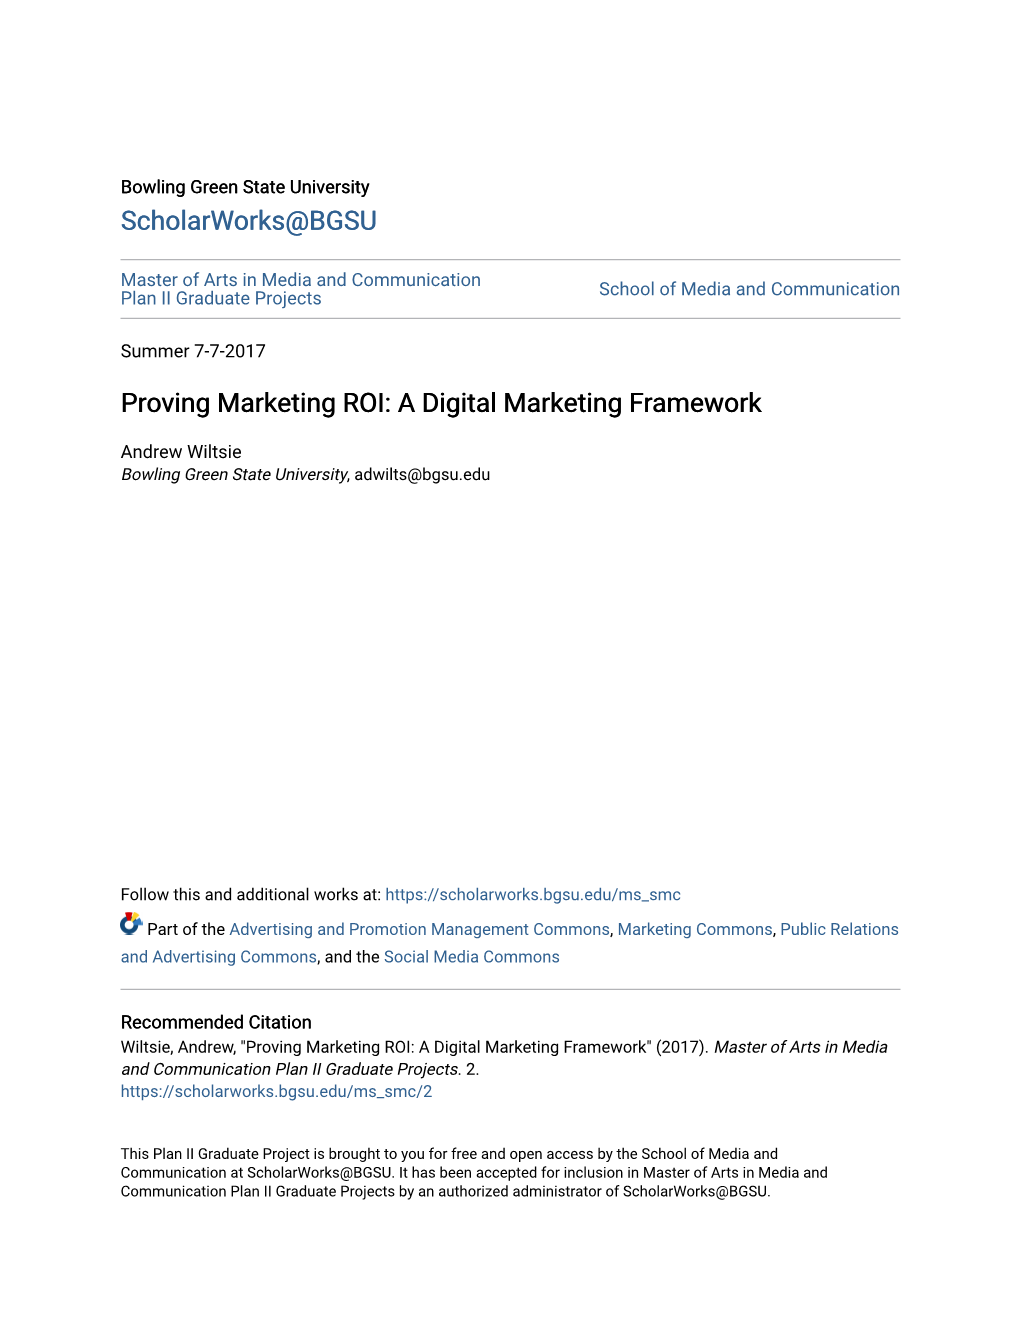 Proving Marketing ROI: a Digital Marketing Framework